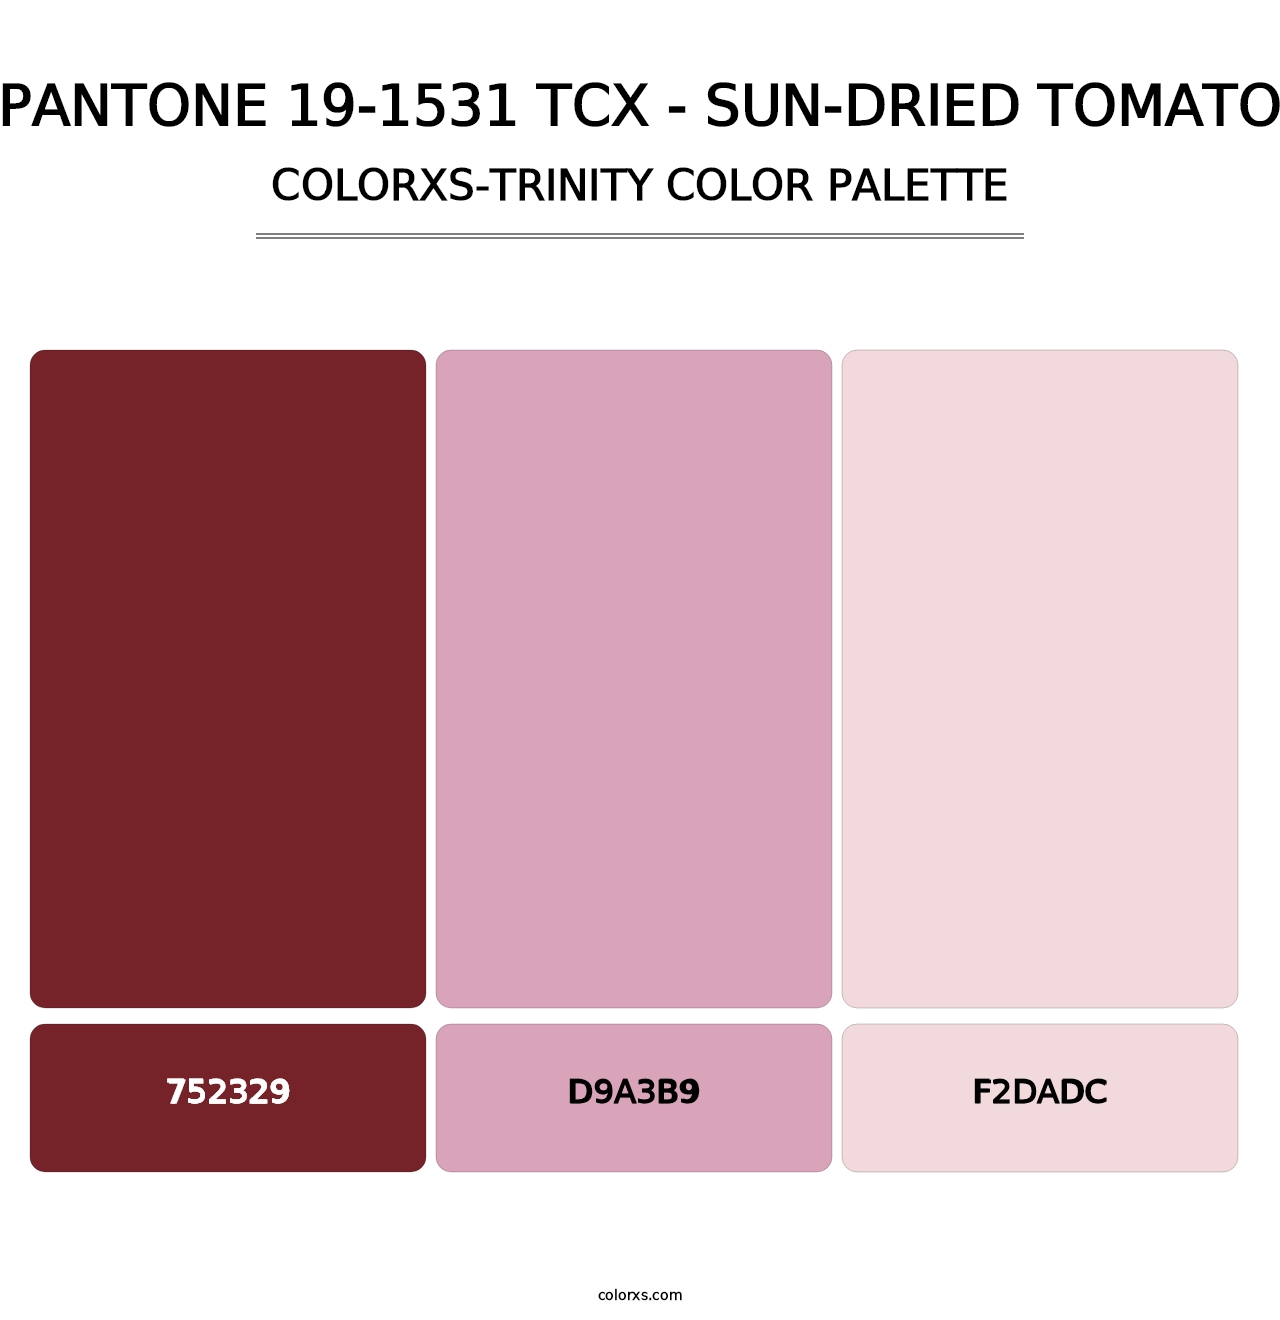 PANTONE 19-1531 TCX - Sun-Dried Tomato - Colorxs Trinity Palette